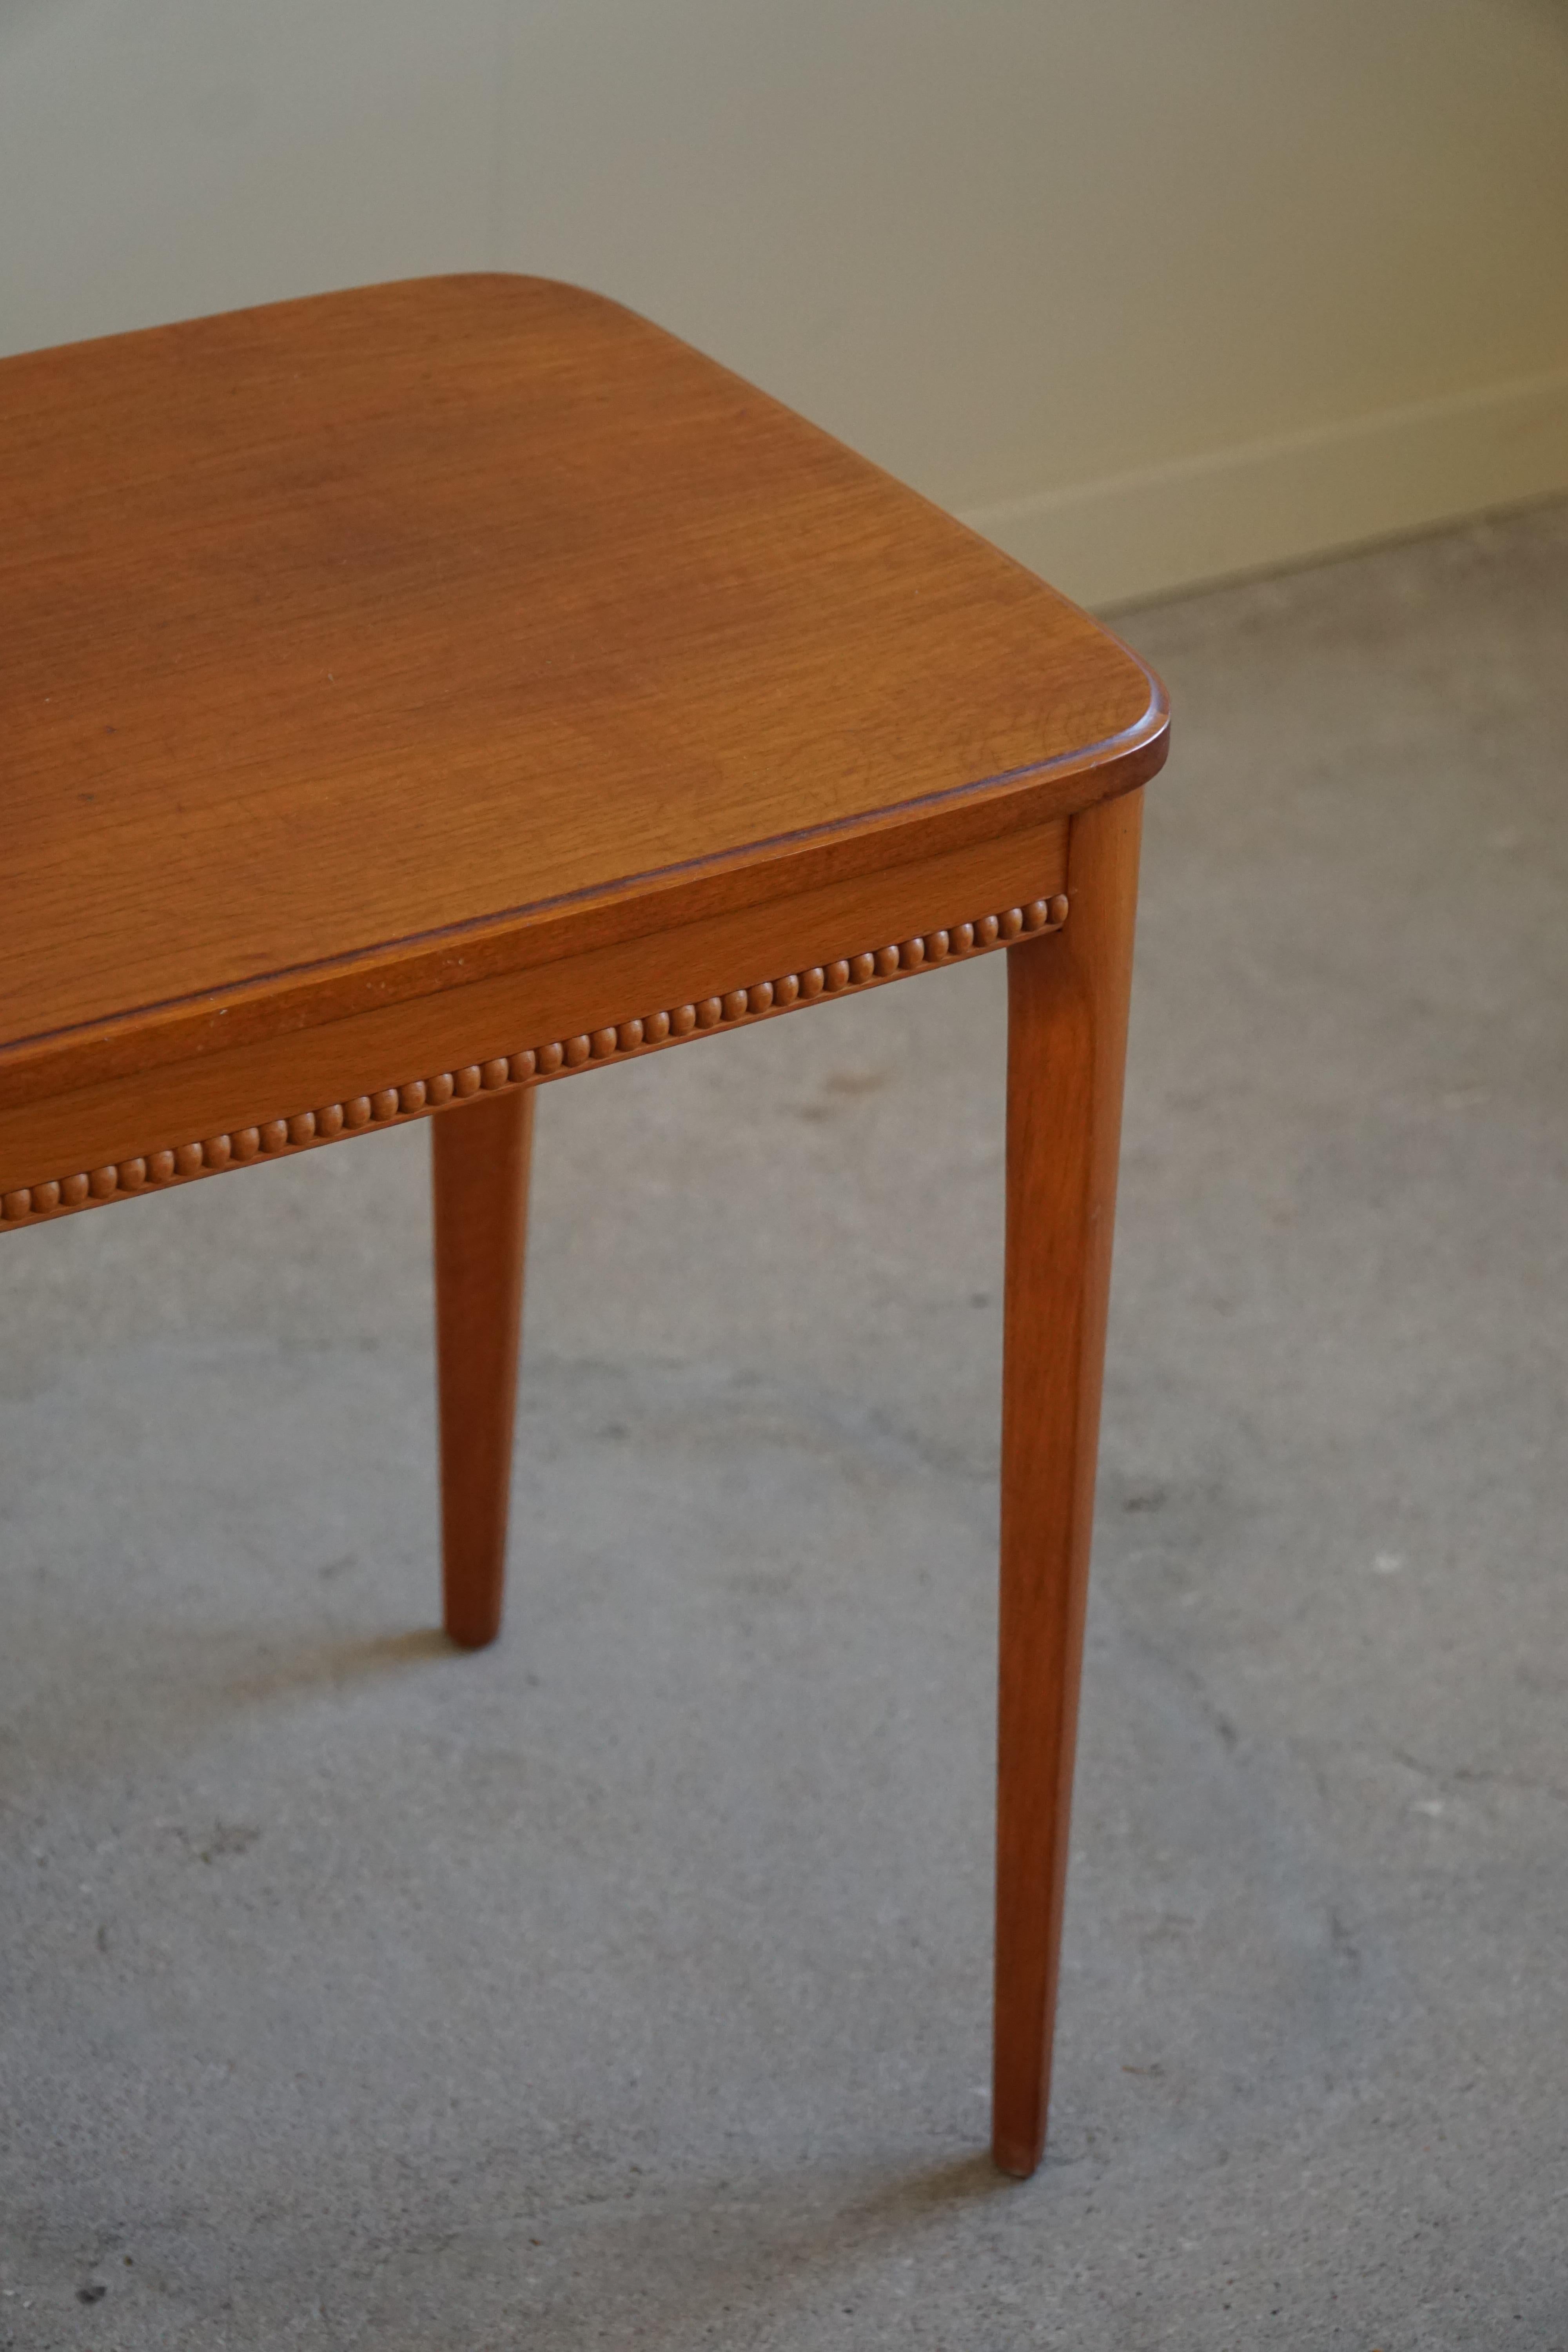 Side Table in Teak, Danish Mid Century Modern, 1950s  For Sale 1